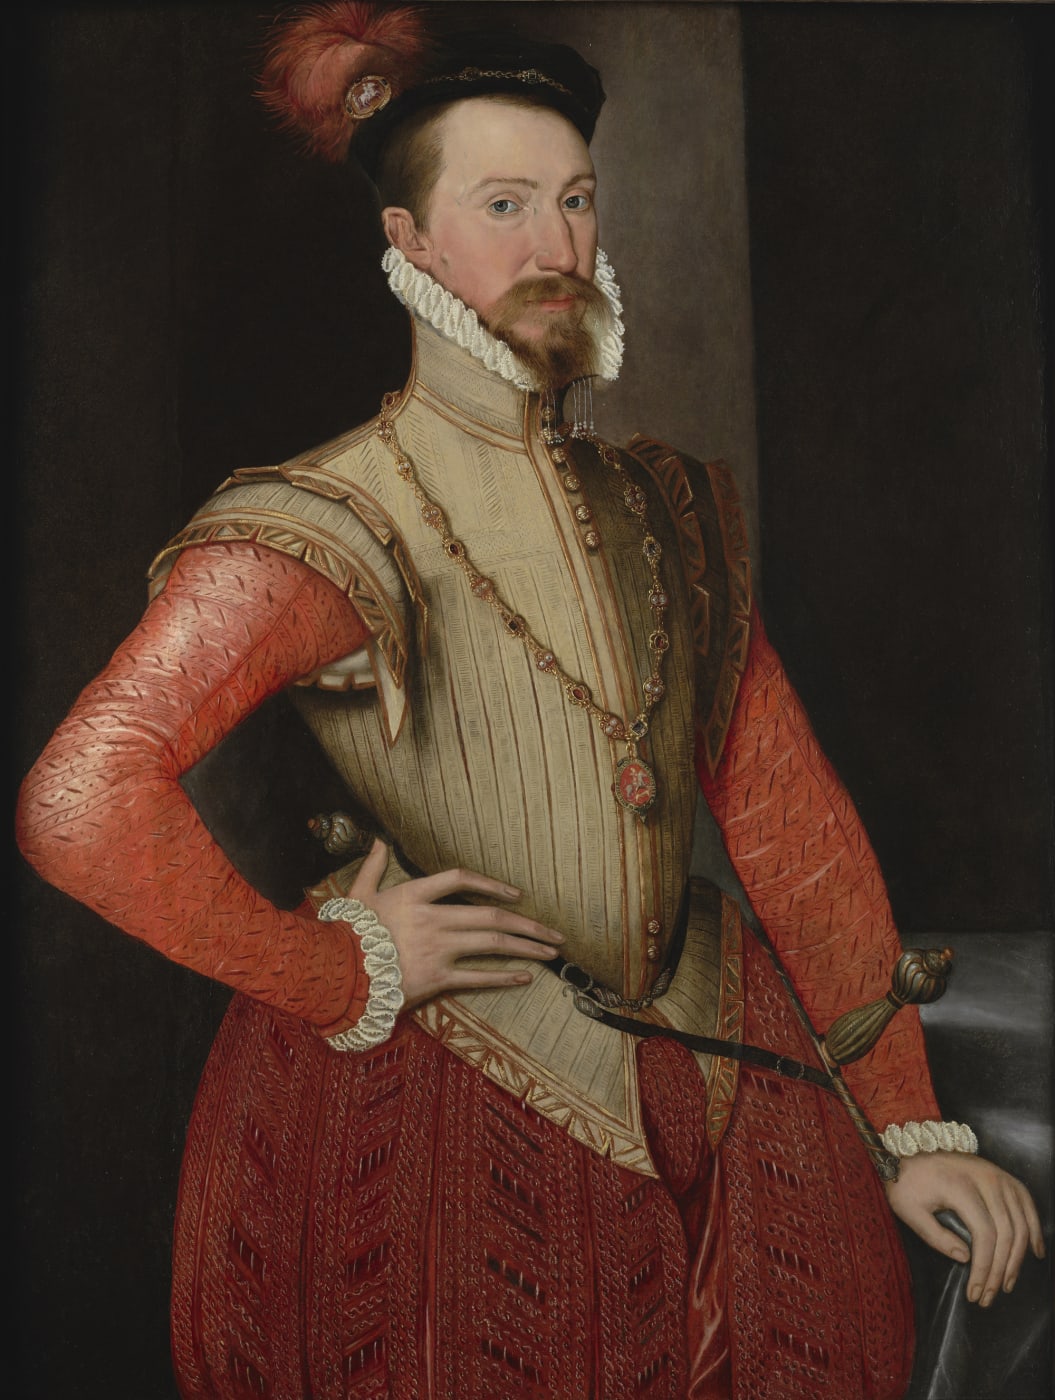 Tudor Portrait for sale of Robert Dudley wearing the order of the garter